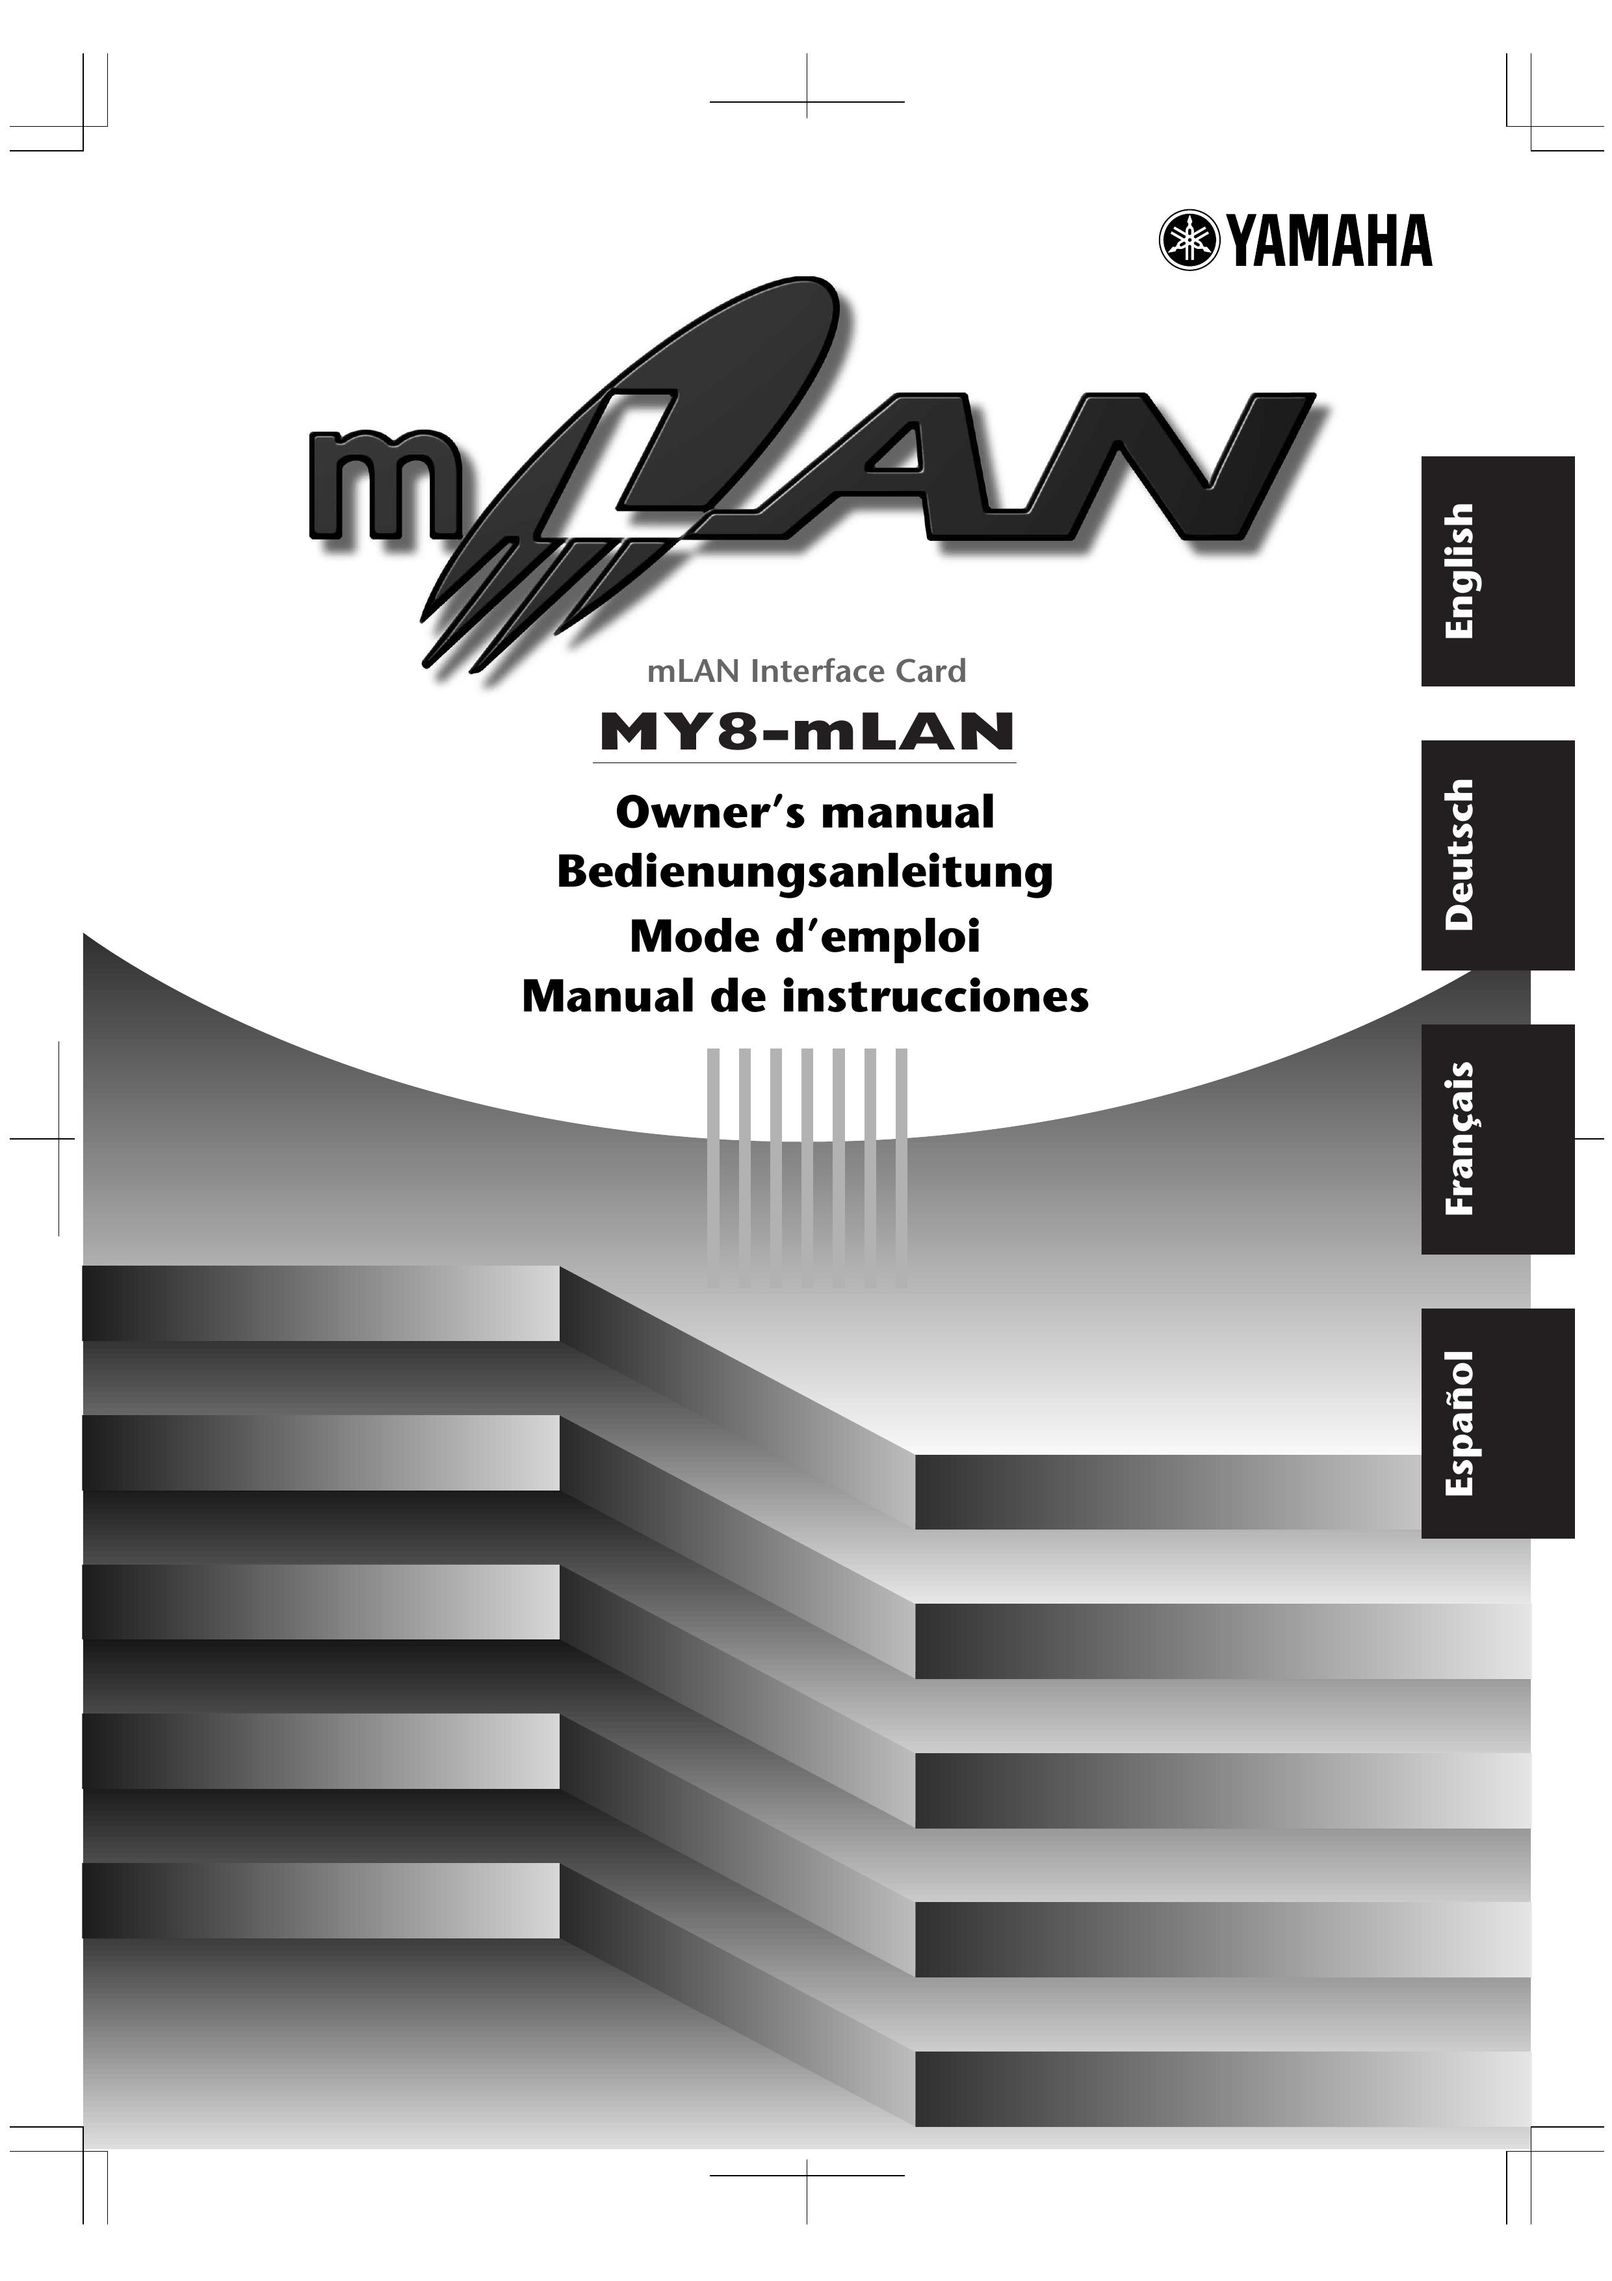 Yamaha MY8-mLAN Computer Hardware User Manual